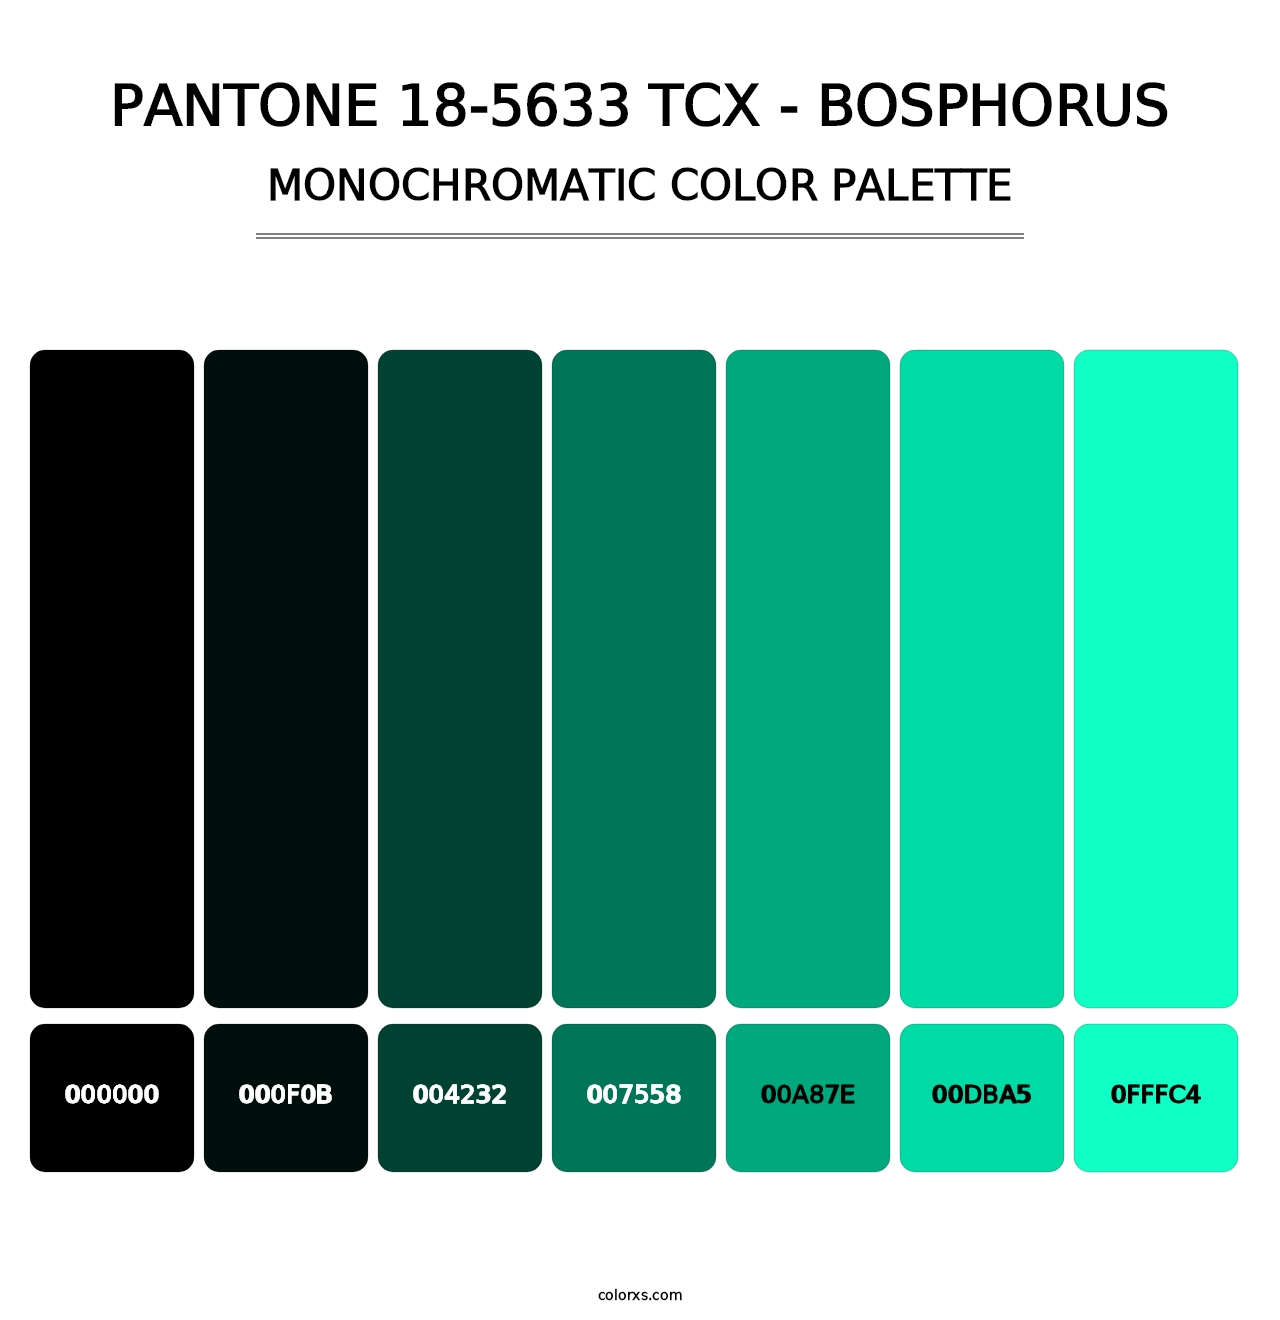 PANTONE 18-5633 TCX - Bosphorus - Monochromatic Color Palette